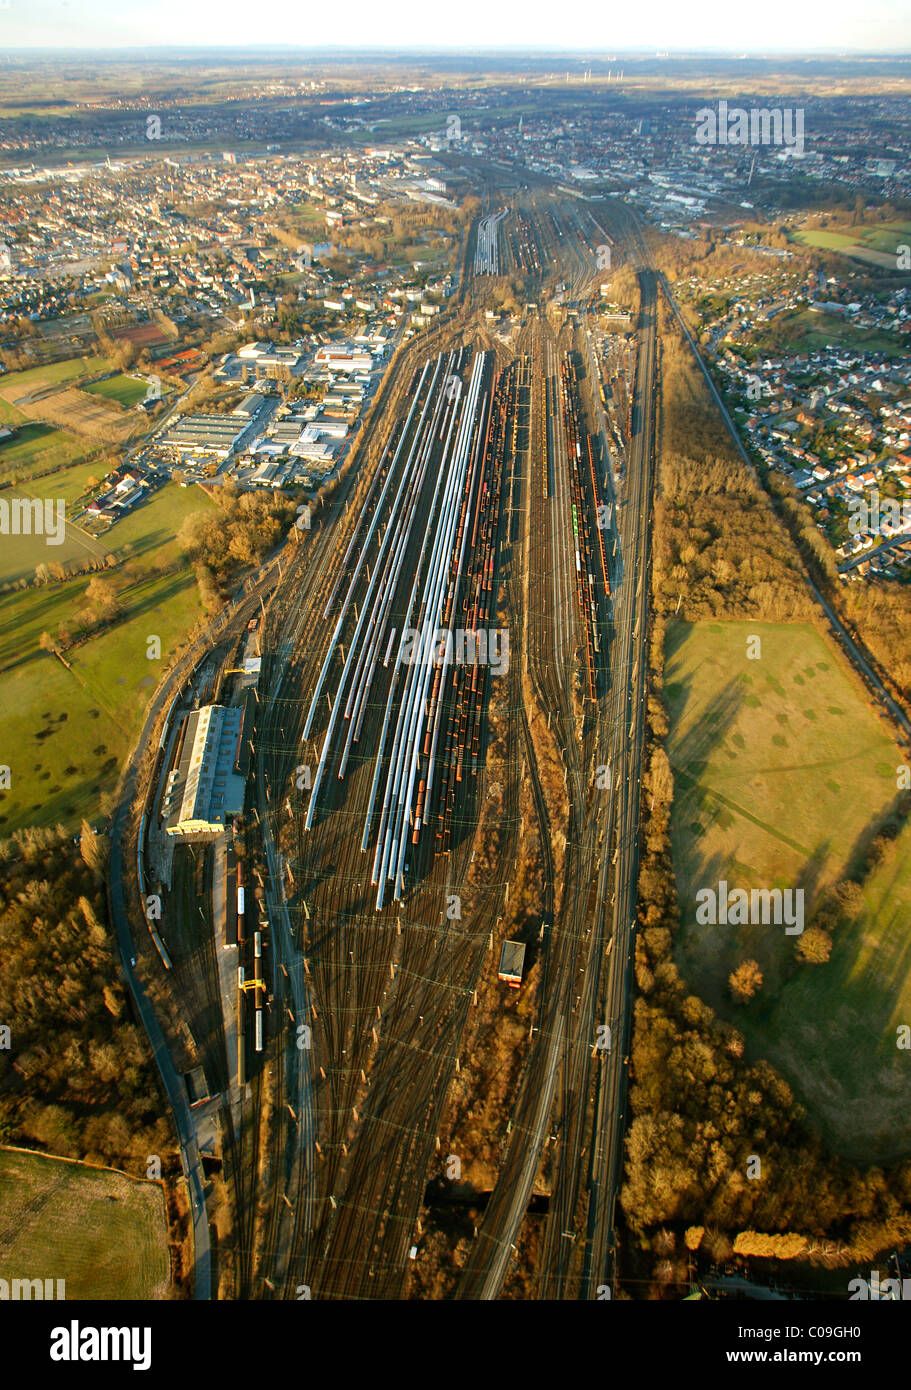 Aerial view, freight terminal, Hamm, Ruhrgebiet region, North Rhine-Westphalia, Germany, Europe Stock Photo